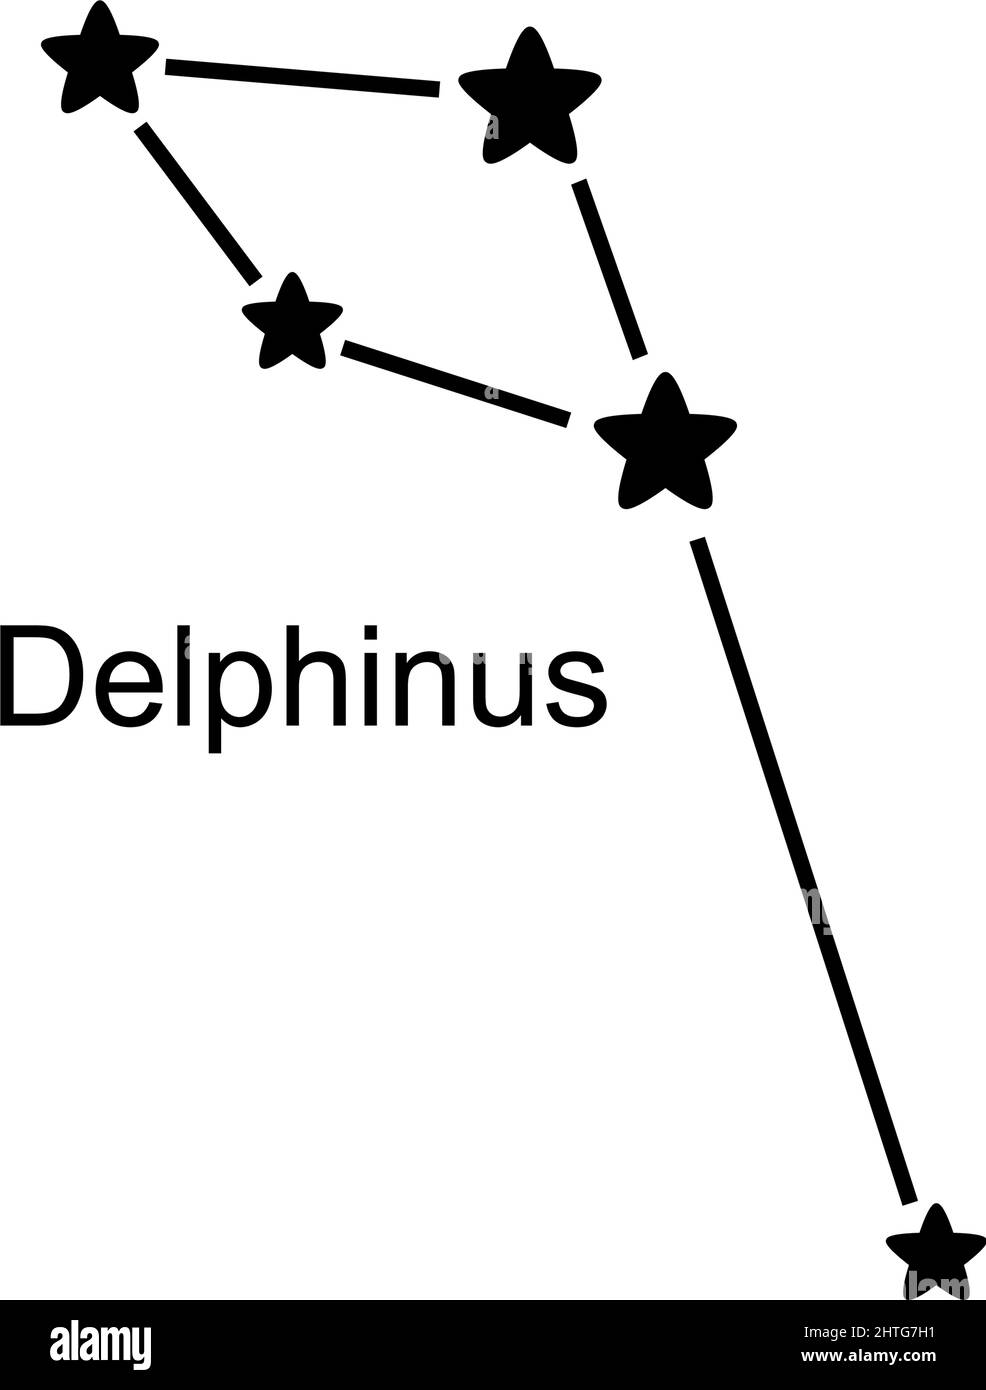 Constellation Delphinus on white background, vector illustration Stock Vector